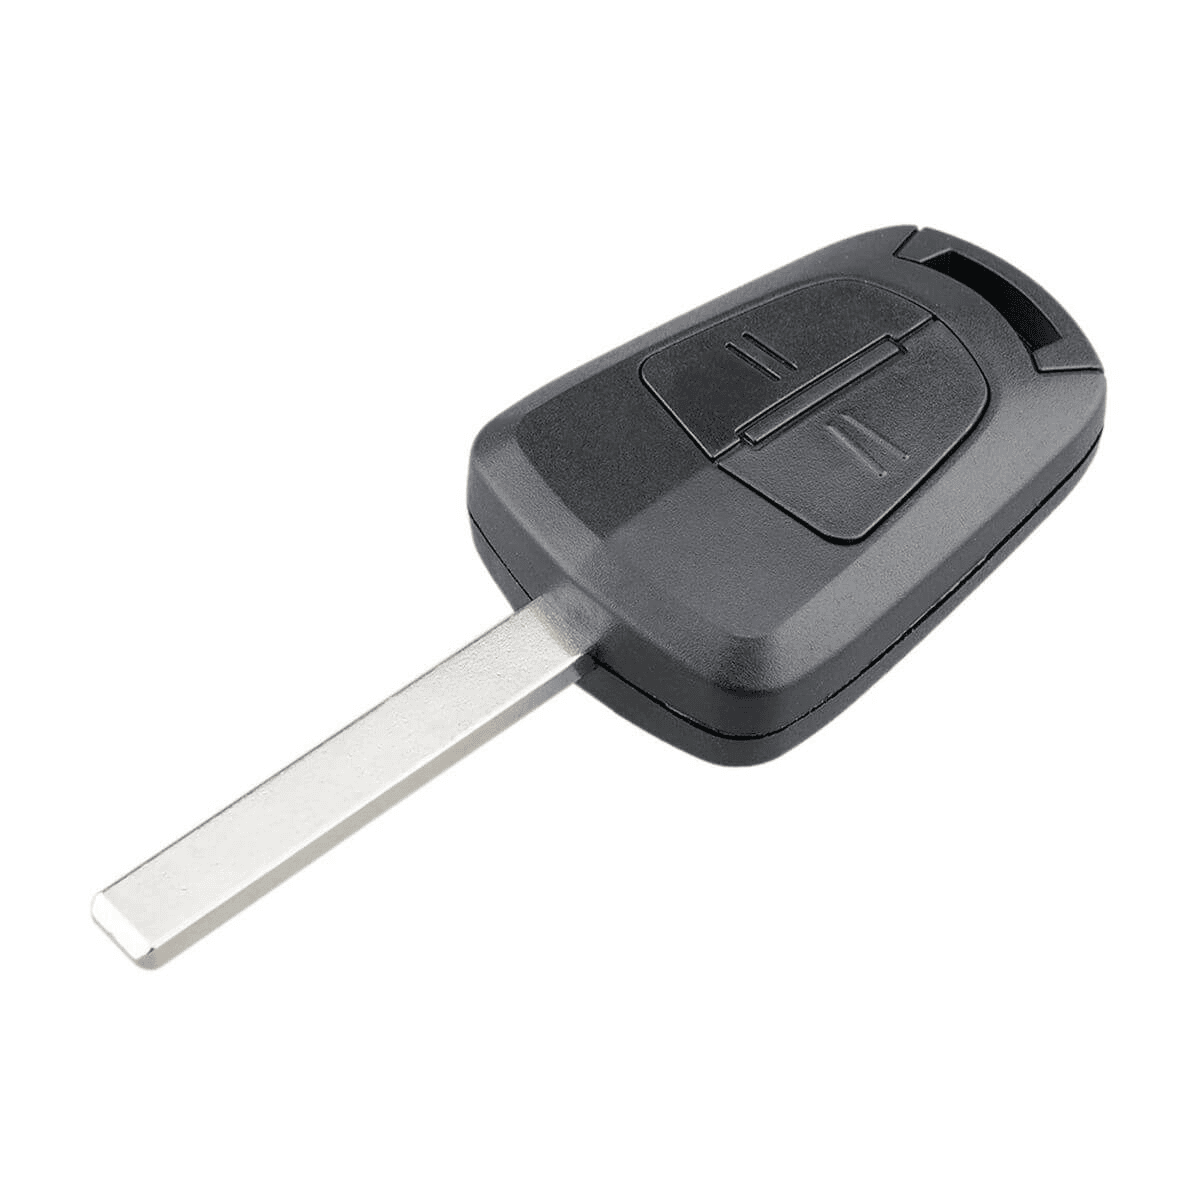 Selected image for CAR ACESSORIES 888 Kućište auto ključa sa 2 tastera za Opel A35-AP000